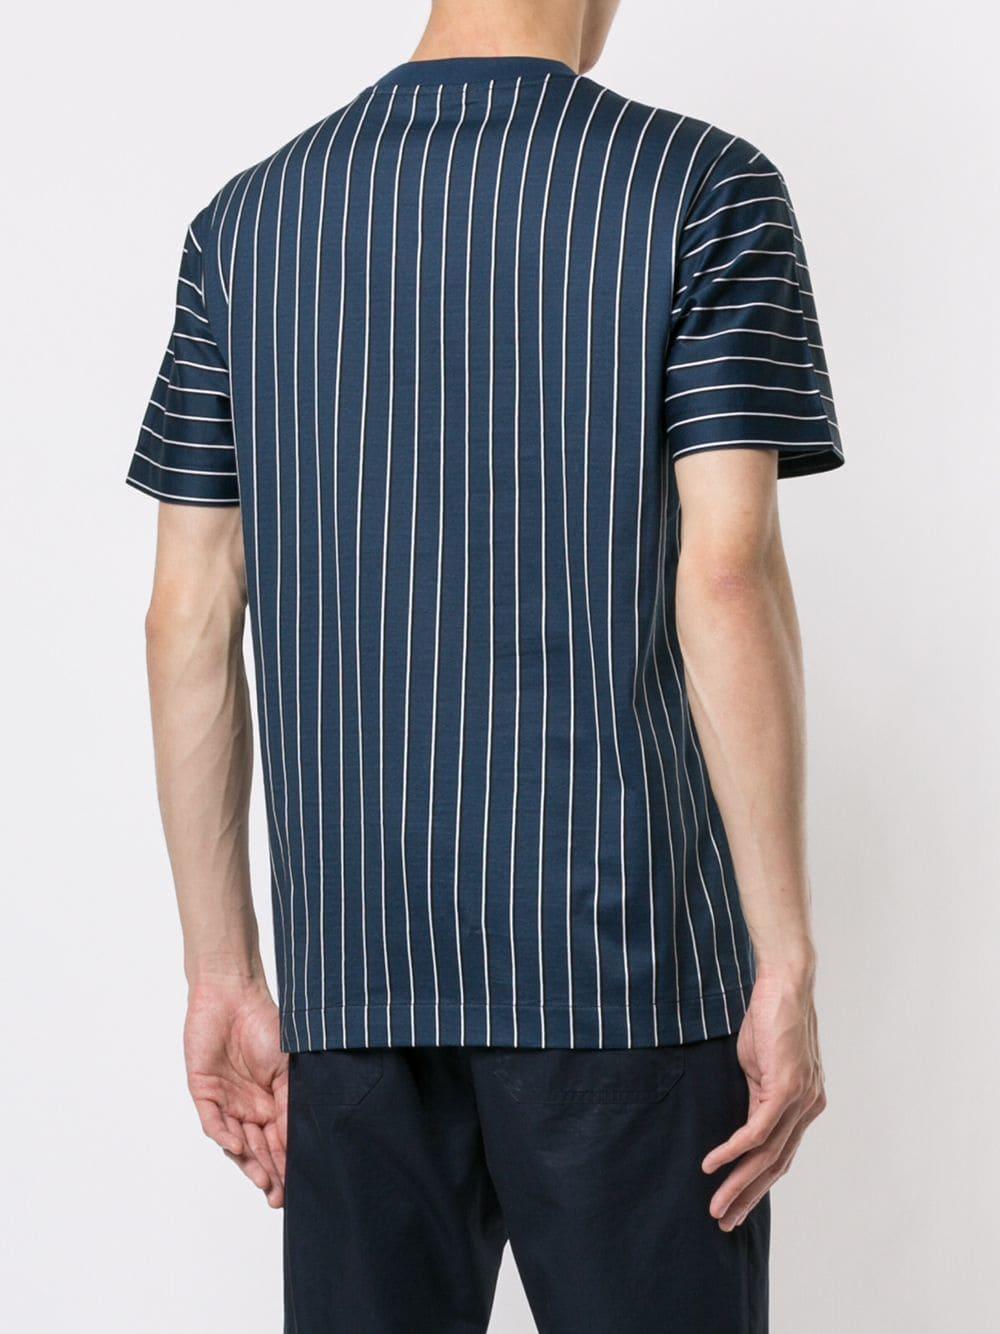 Cerruti 1881 Cotton Striped Print T-shirt in Blue for Men - Lyst